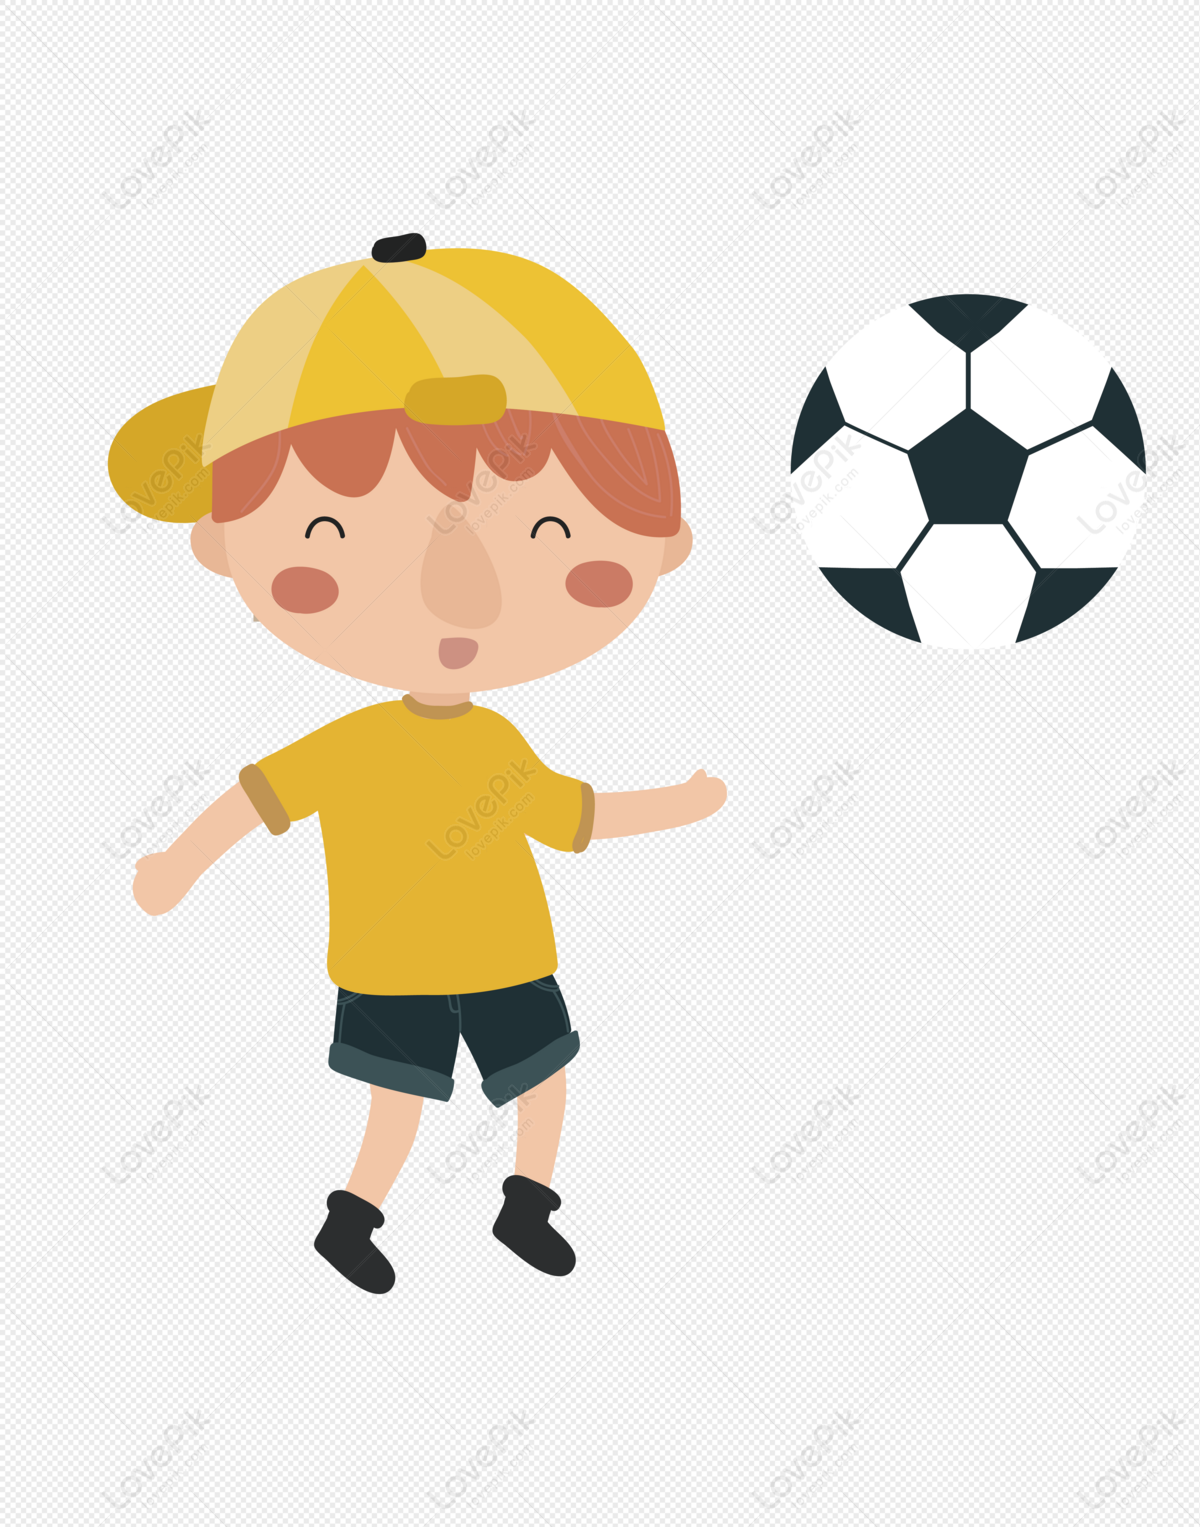 Illustrtaion De Un Niño De Patear La Pelota De Fútbol En Un Fondo